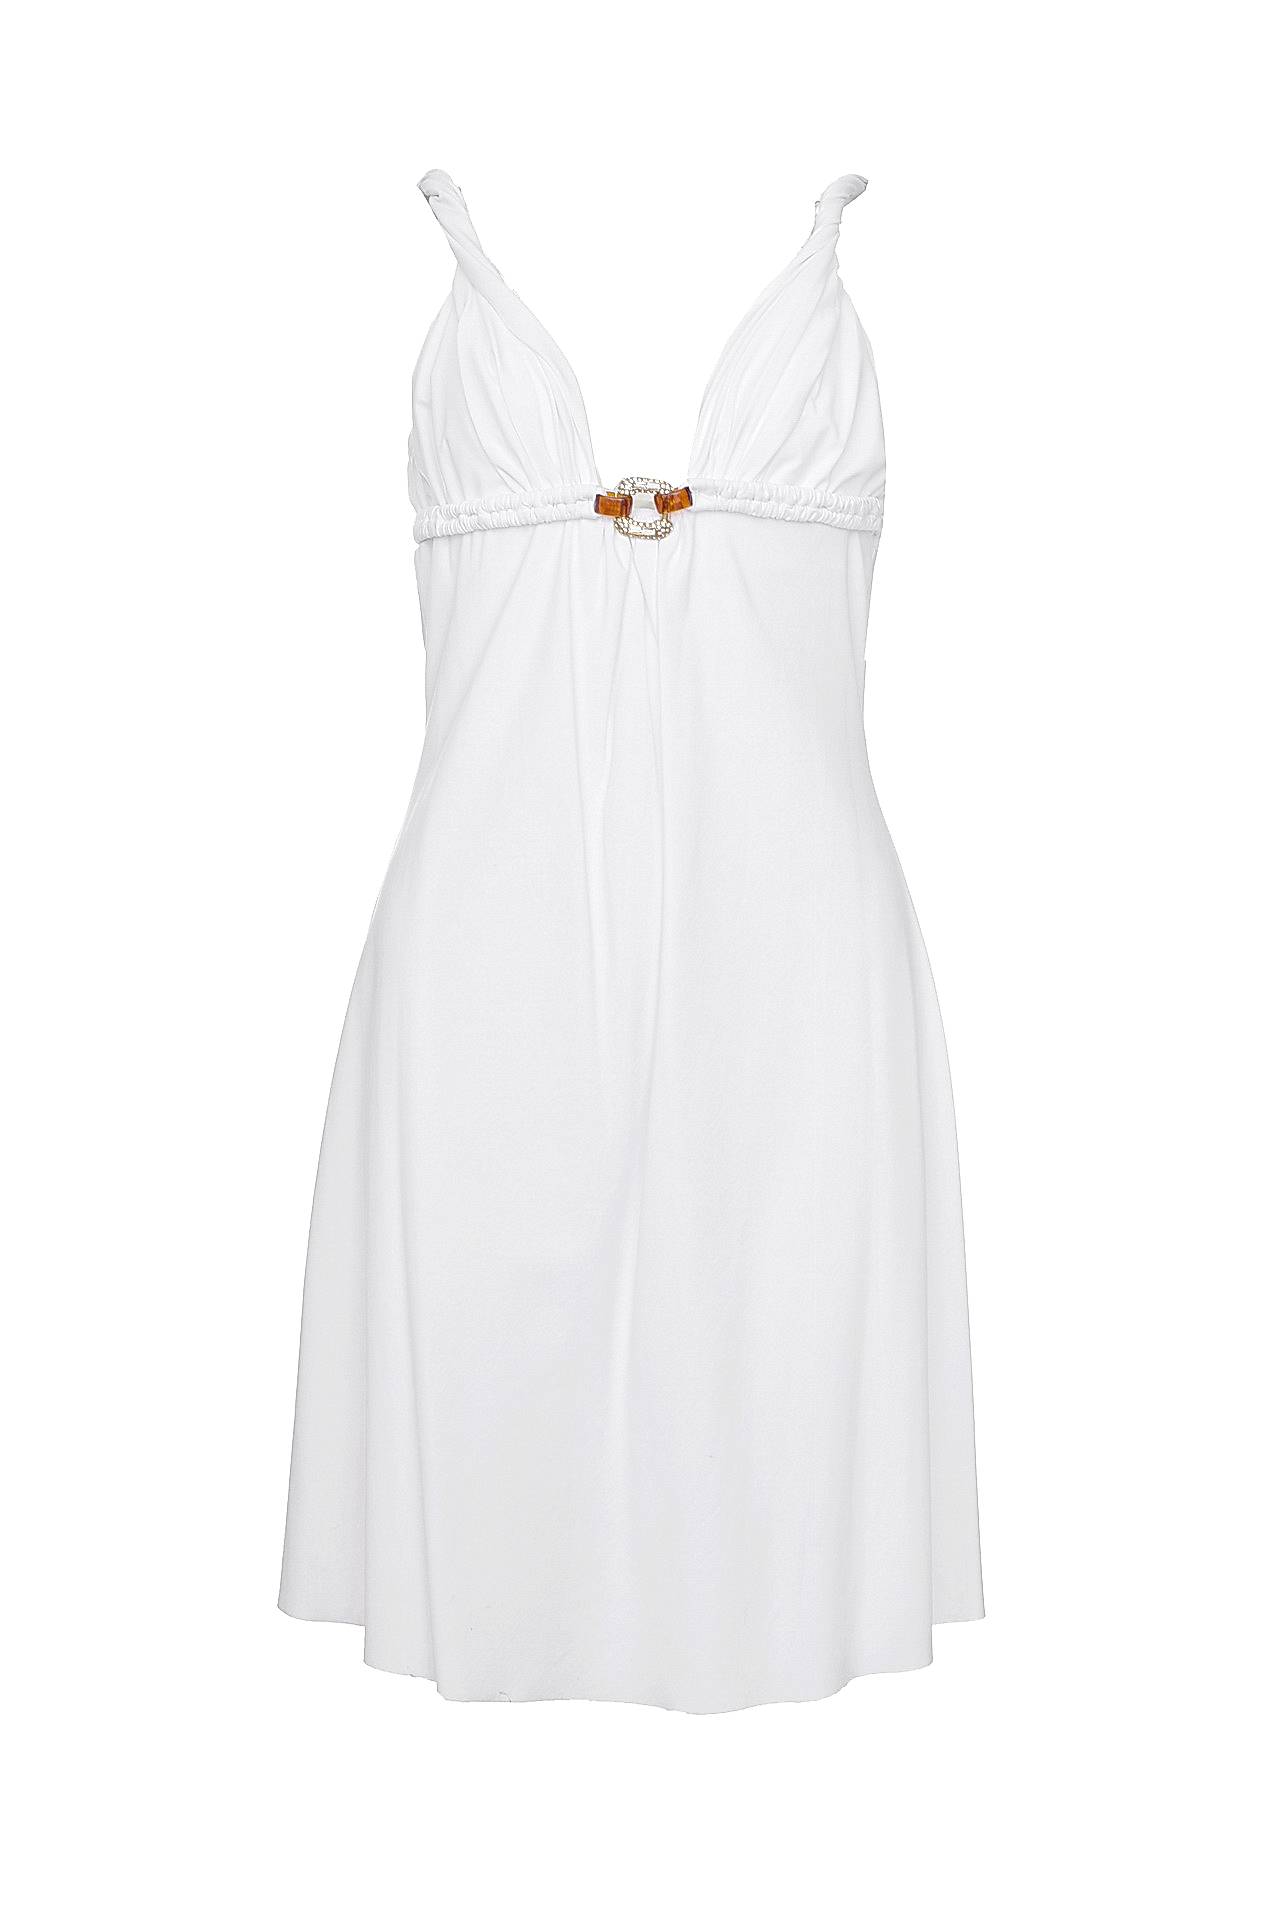 Одежда женская Сарафан VDP VIA DELLE PERLE (0200/18). Купить за 9280 руб.